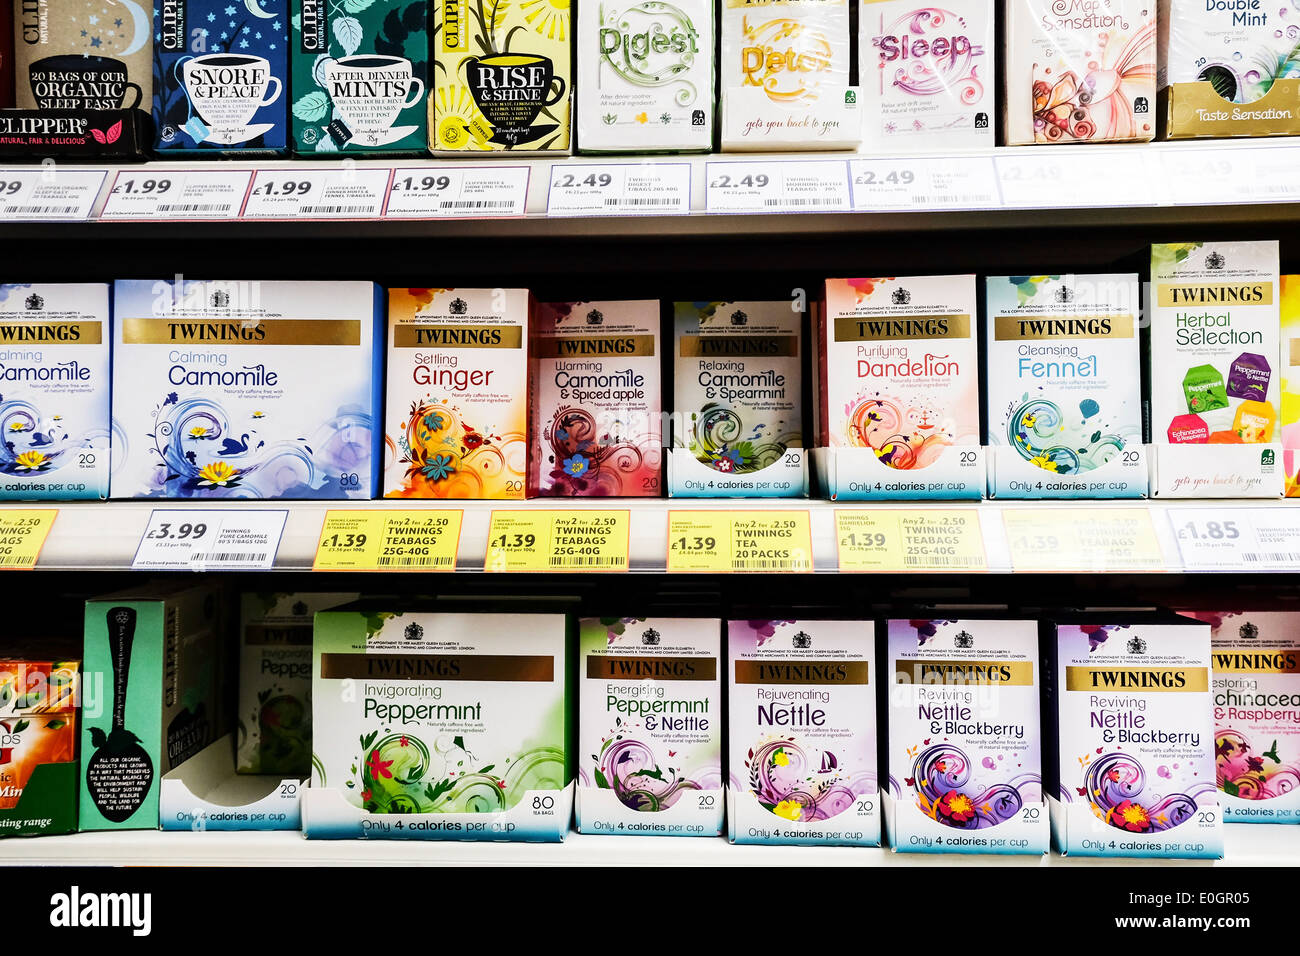 shelves of packets of herbal teas in a tesco supermarket E0GR05